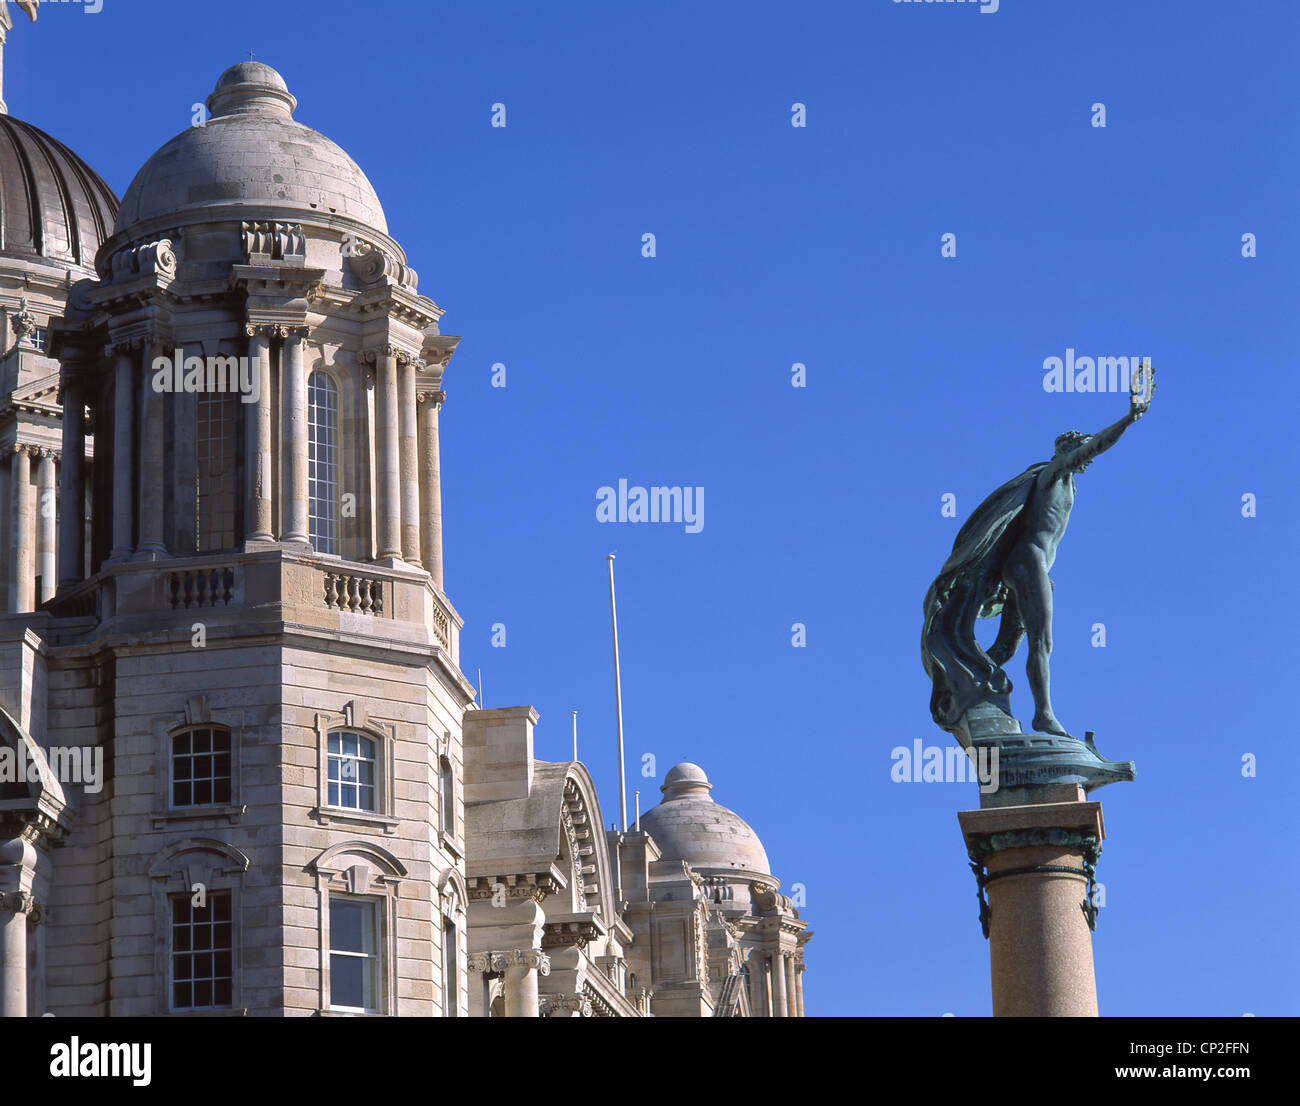 Port of Liverpool Building und War Memorial Statue am Molenkopf Liverpool, Liverpool, Merseyside, England, Vereinigtes Königreich Stockfoto